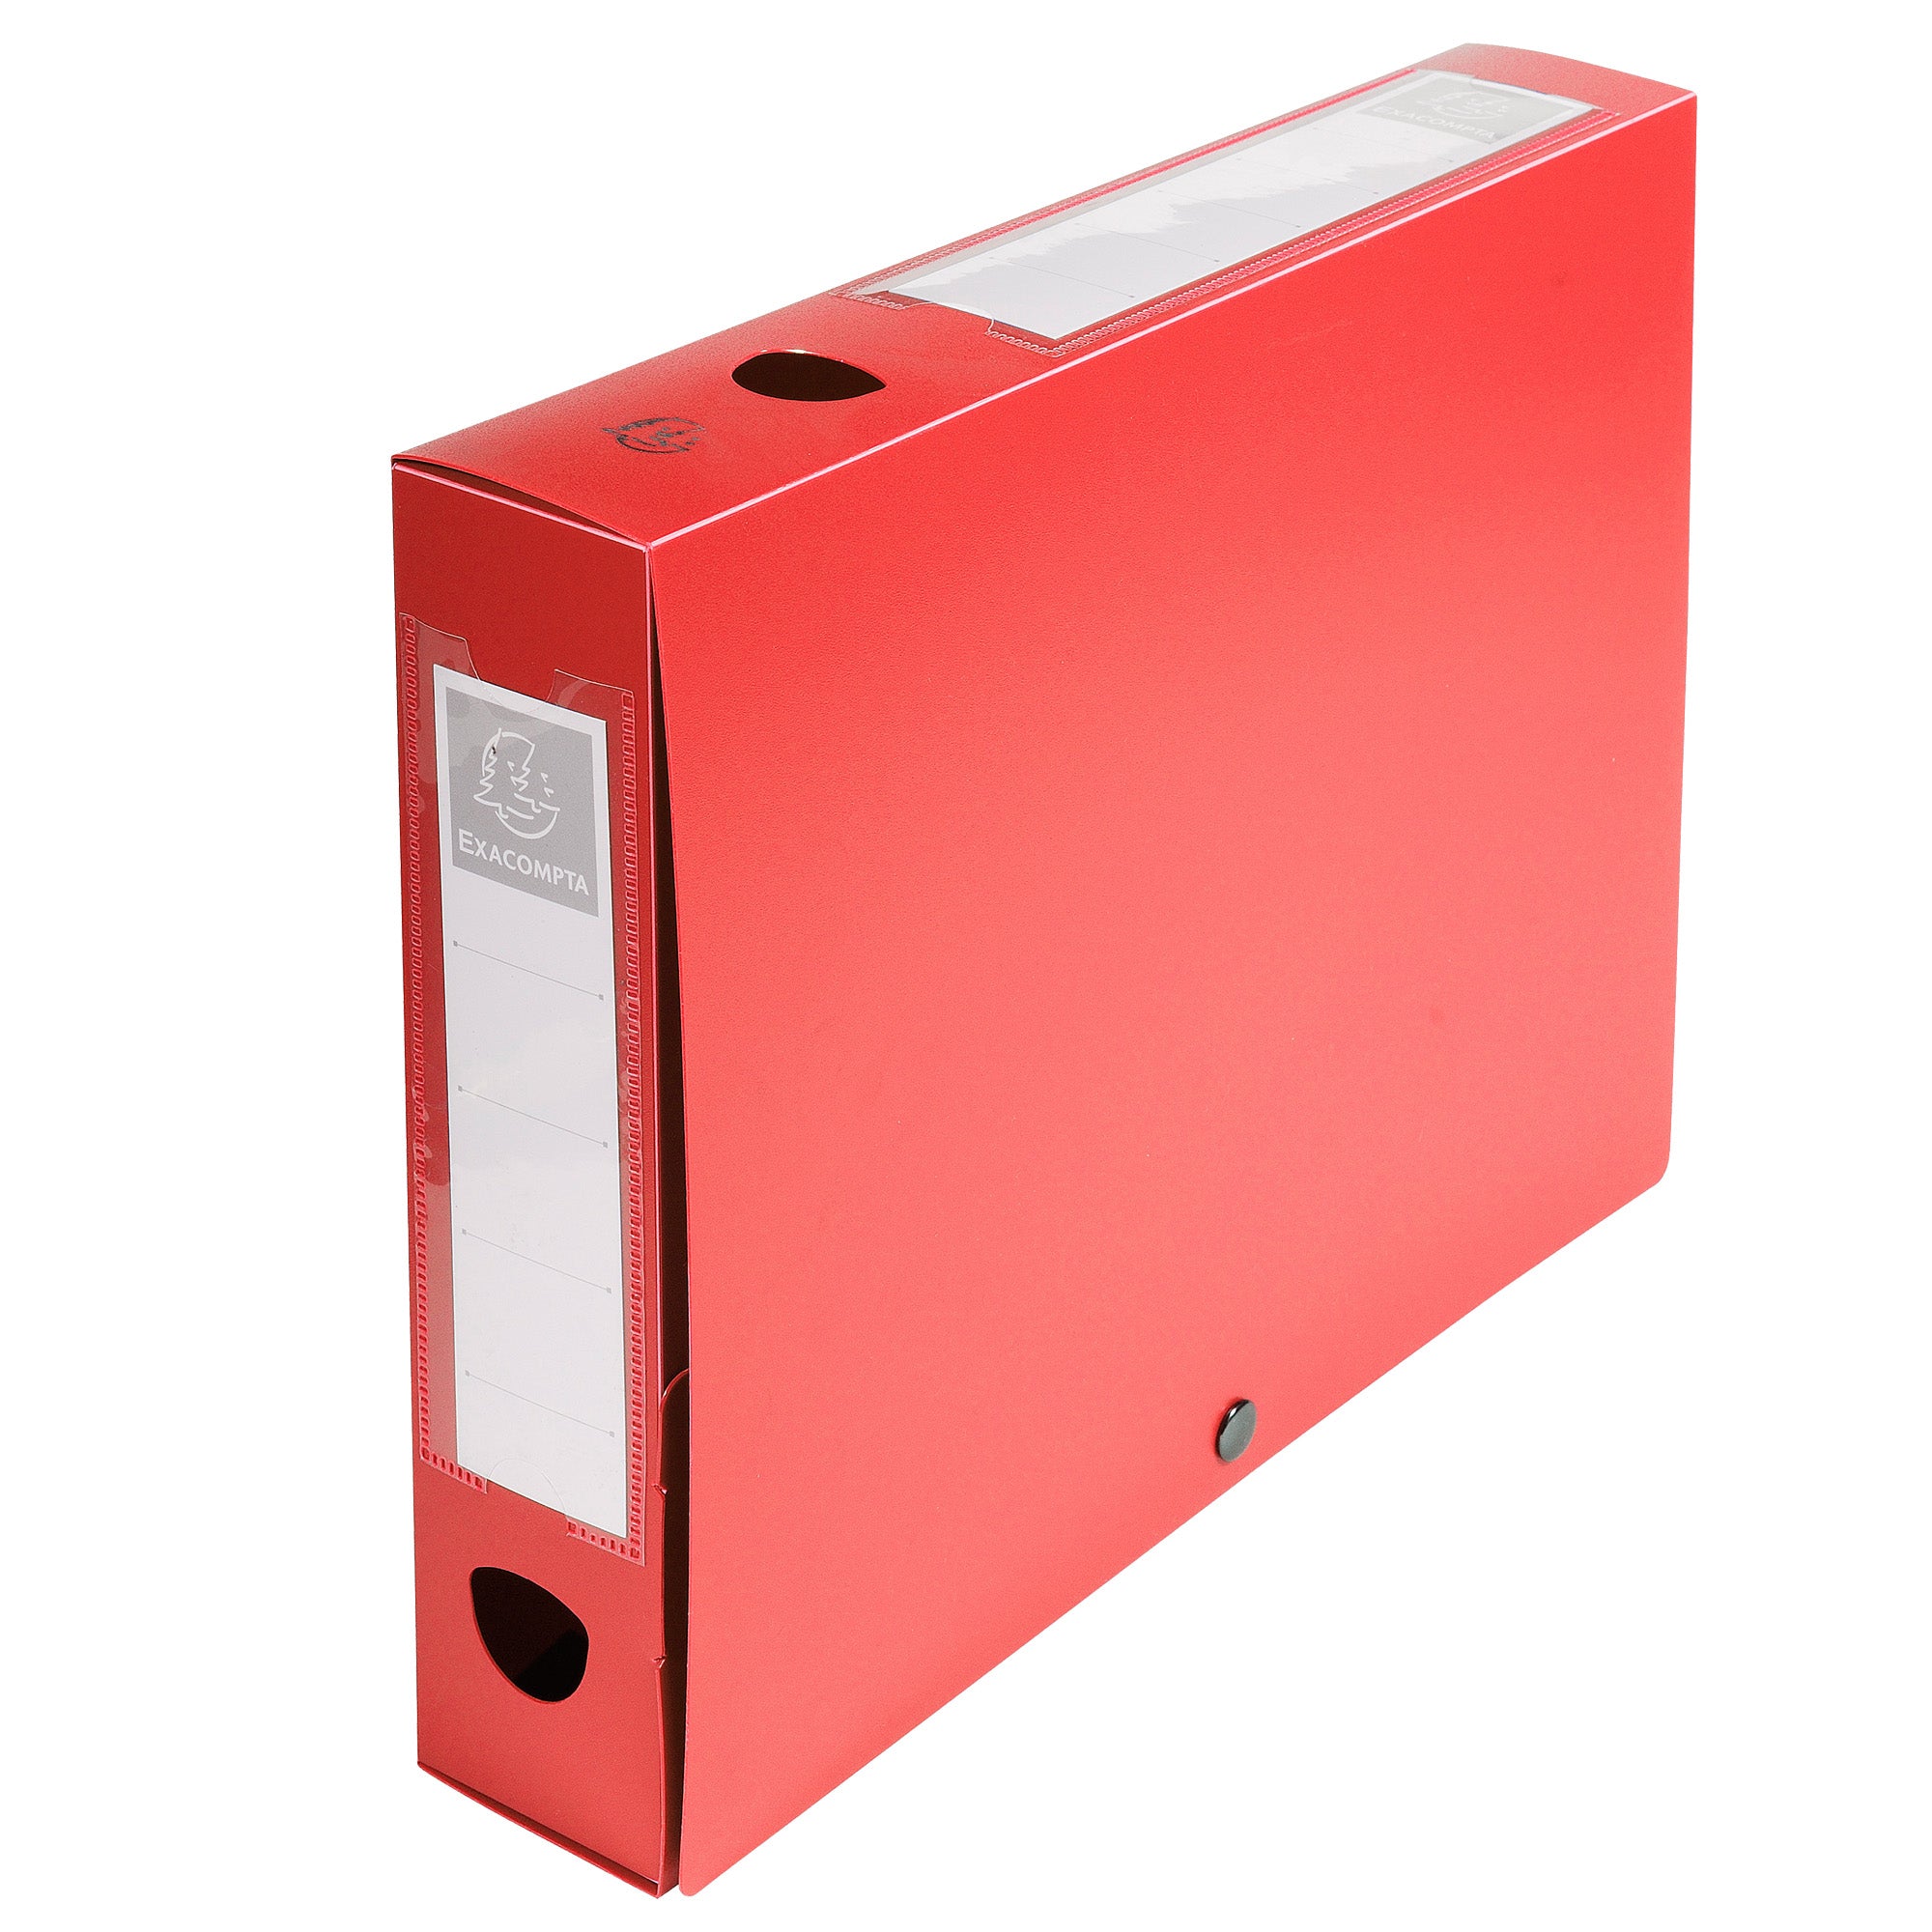 exacompta-scatola-archivio-box-bottone-rosso-f-to-25x33cm-d-60mm